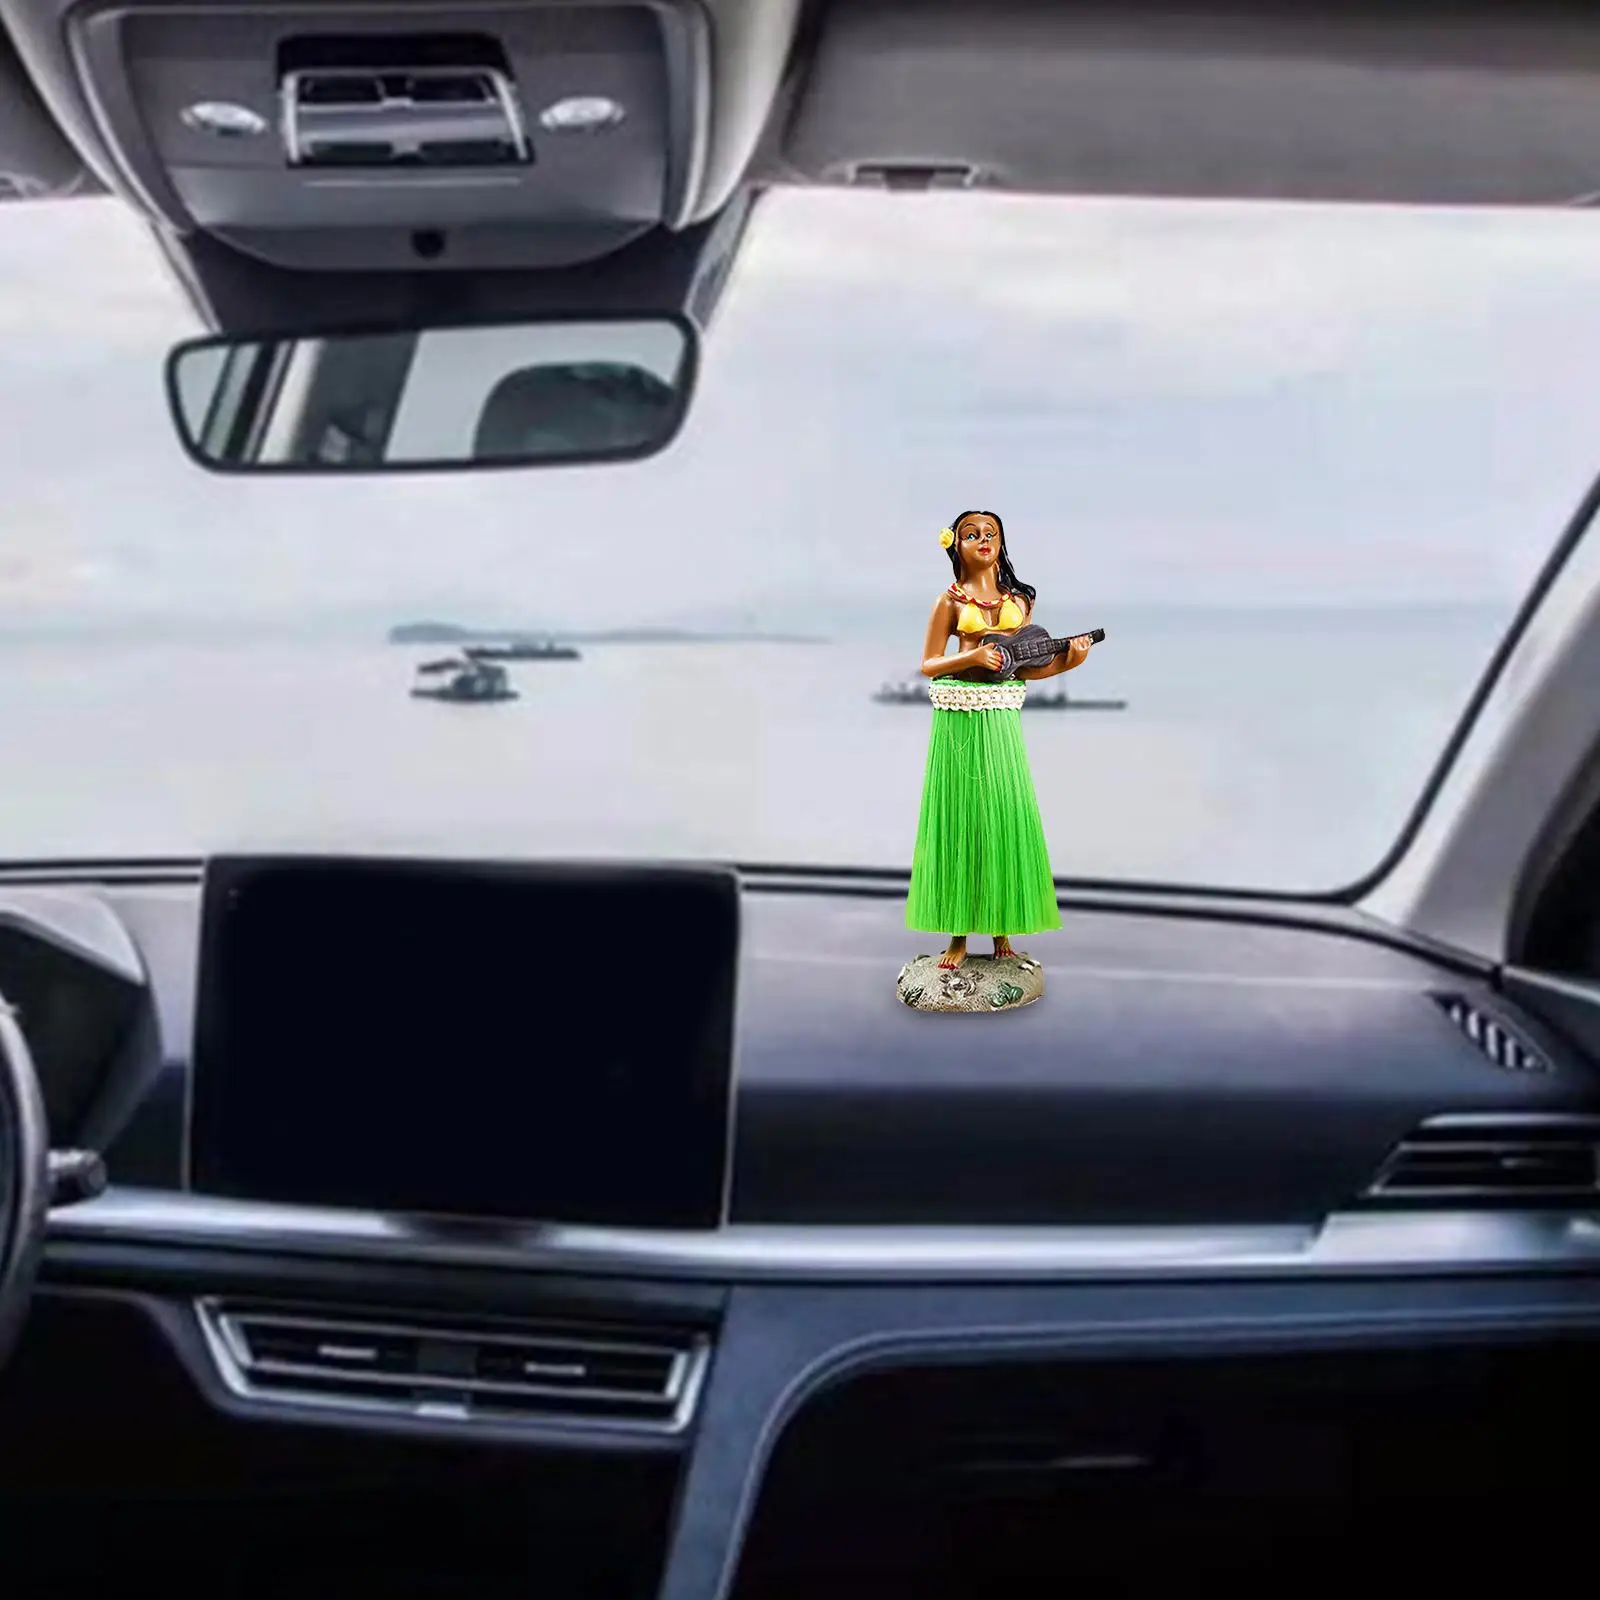 Car Miniature Doll Figures Decor for Auto Interior Tabletop Dashboard